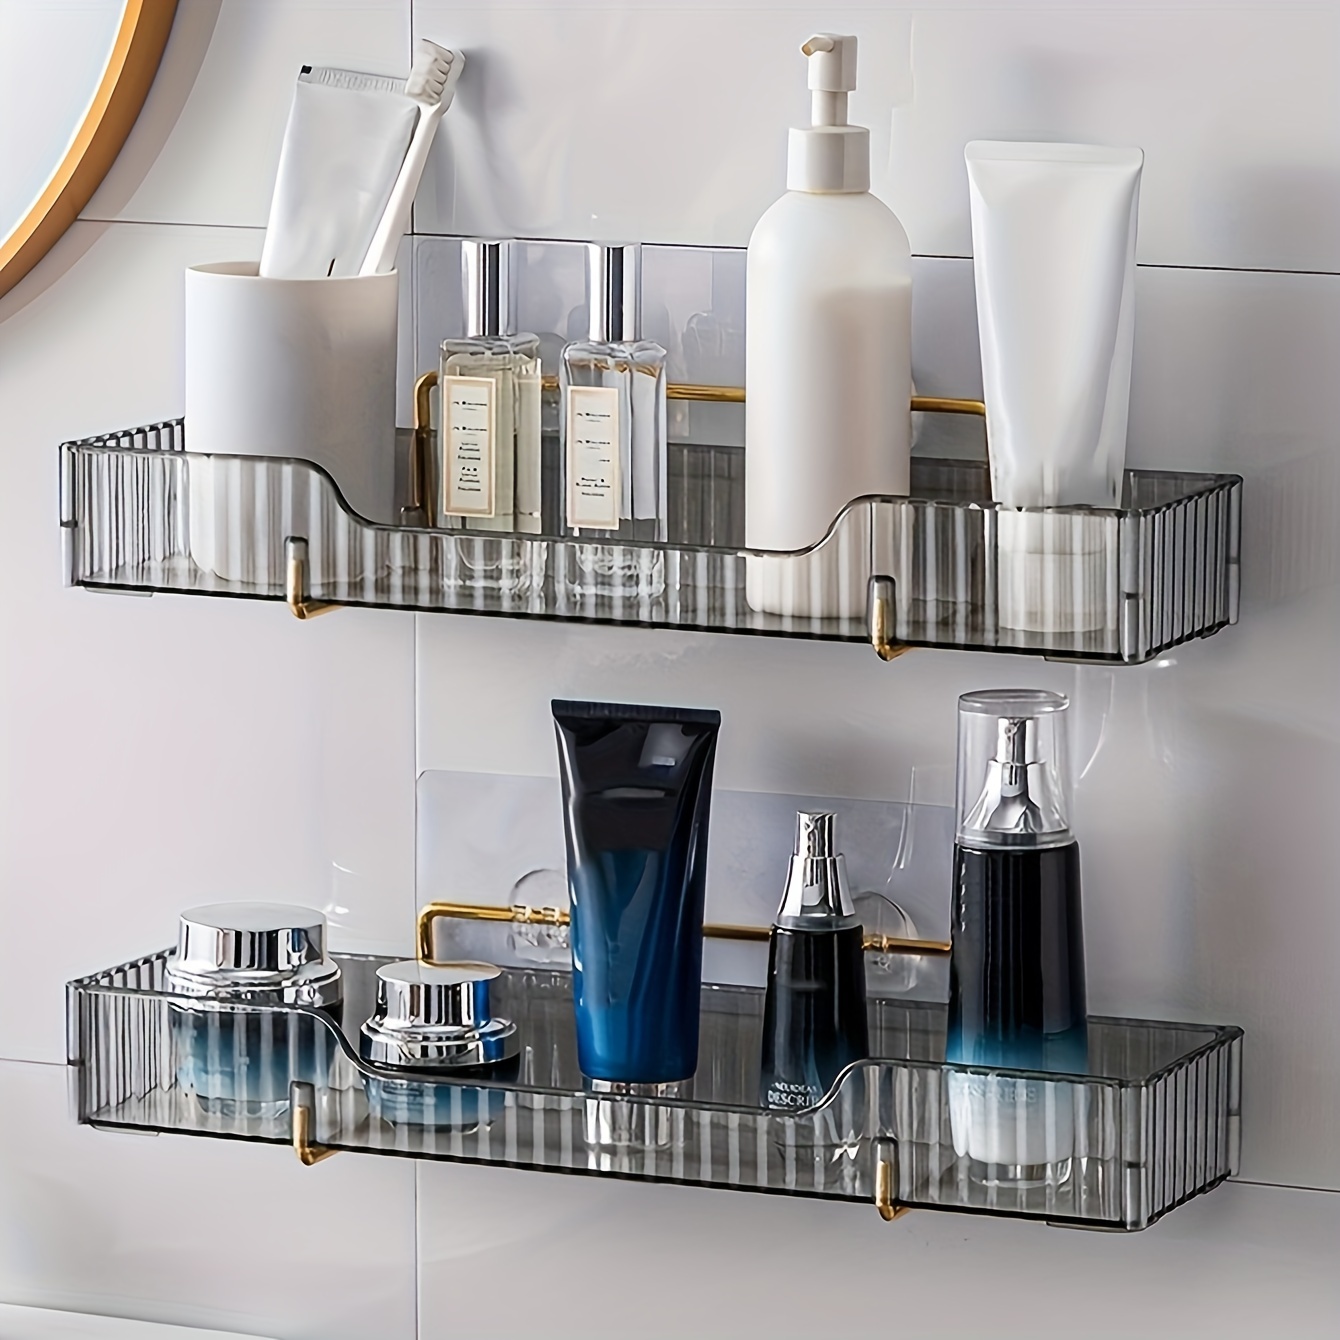 Adhesive Shower Caddy Shelf Shower Organizer Basket Wall with 4